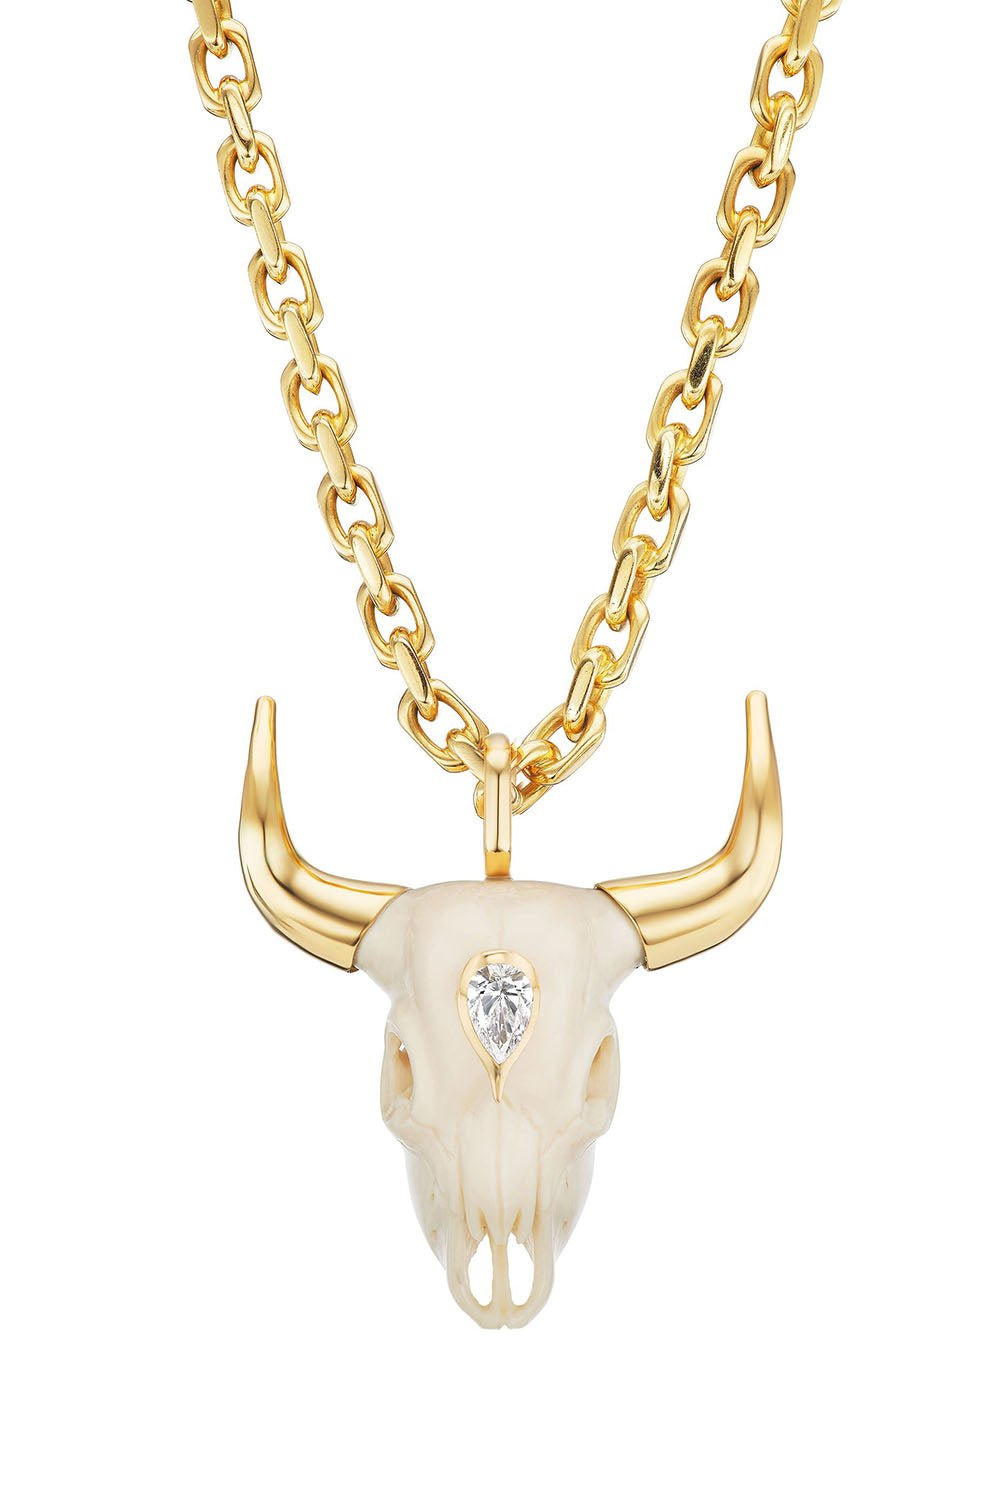 UNIFORM OBJECT-Bull Pendant Necklace-YELLOW GOLD